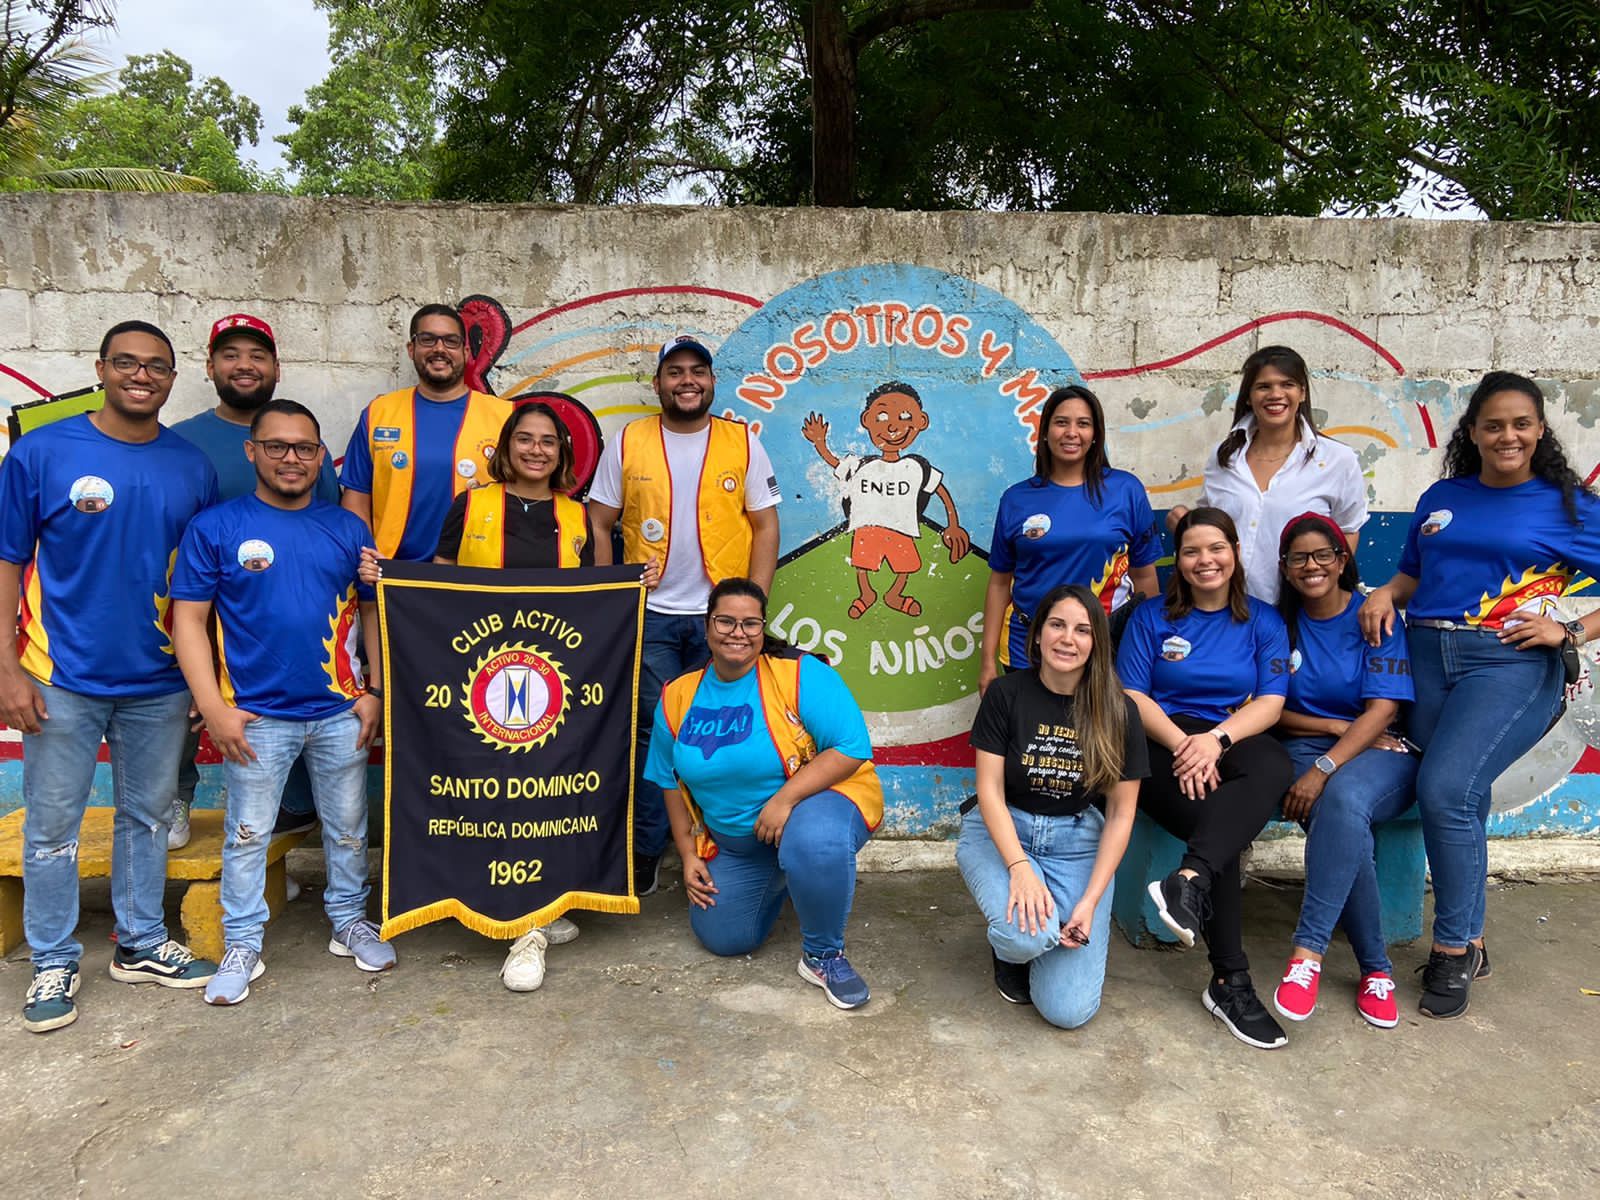 Club Activo 20-30 de Santo Domingo celebra su 60 Aniversario al servicio de la Niñez